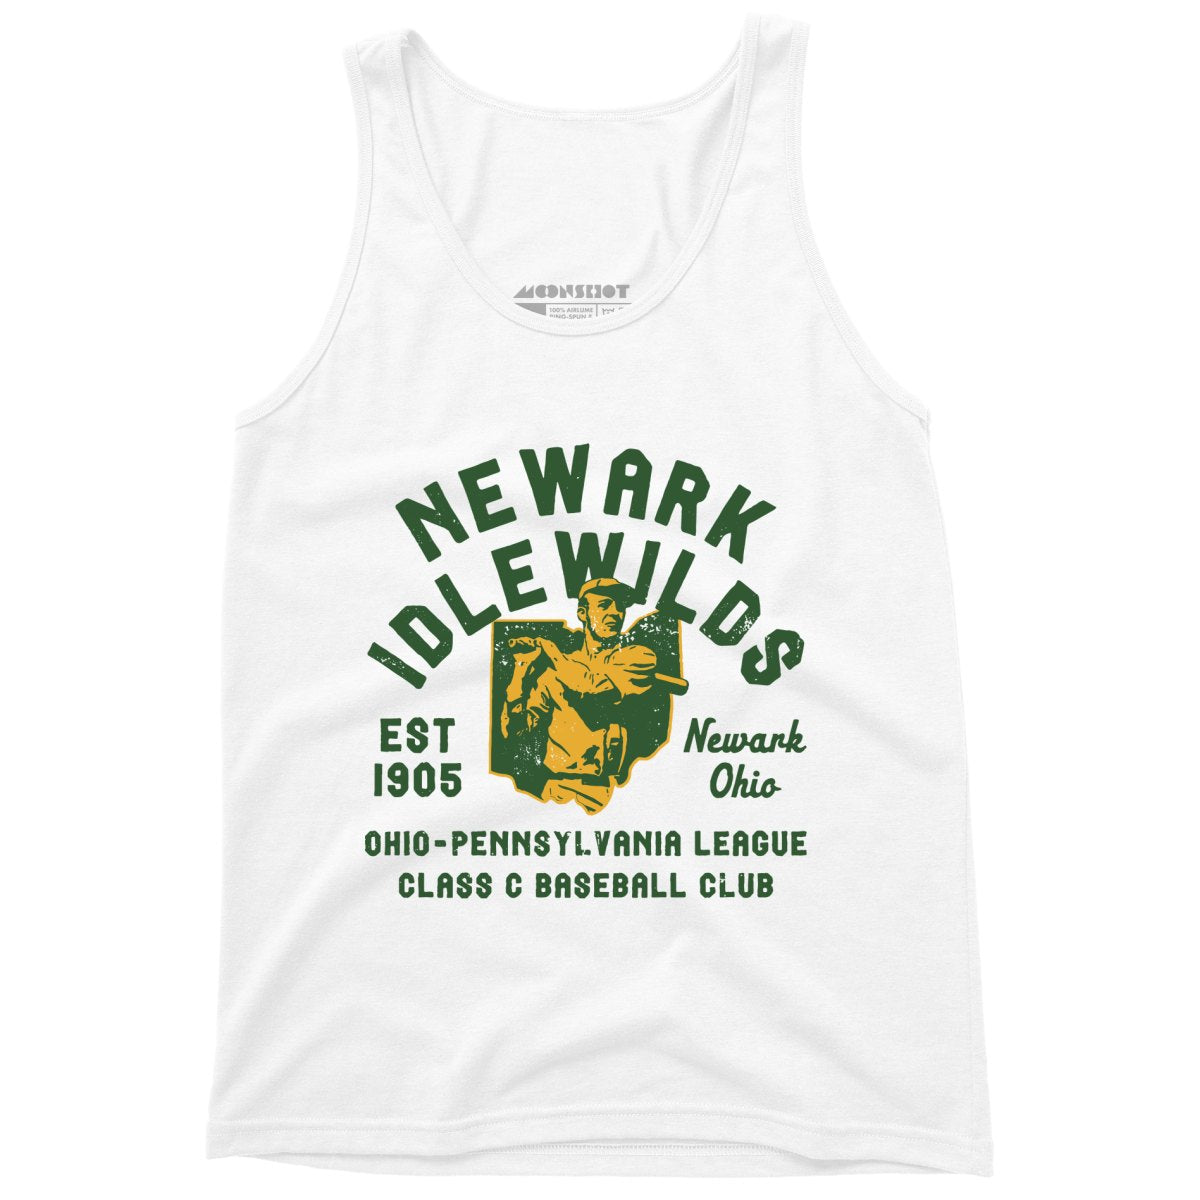 Newark Idlewilds - Ohio - Vintage Defunct Baseball Teams - Unisex Tank Top